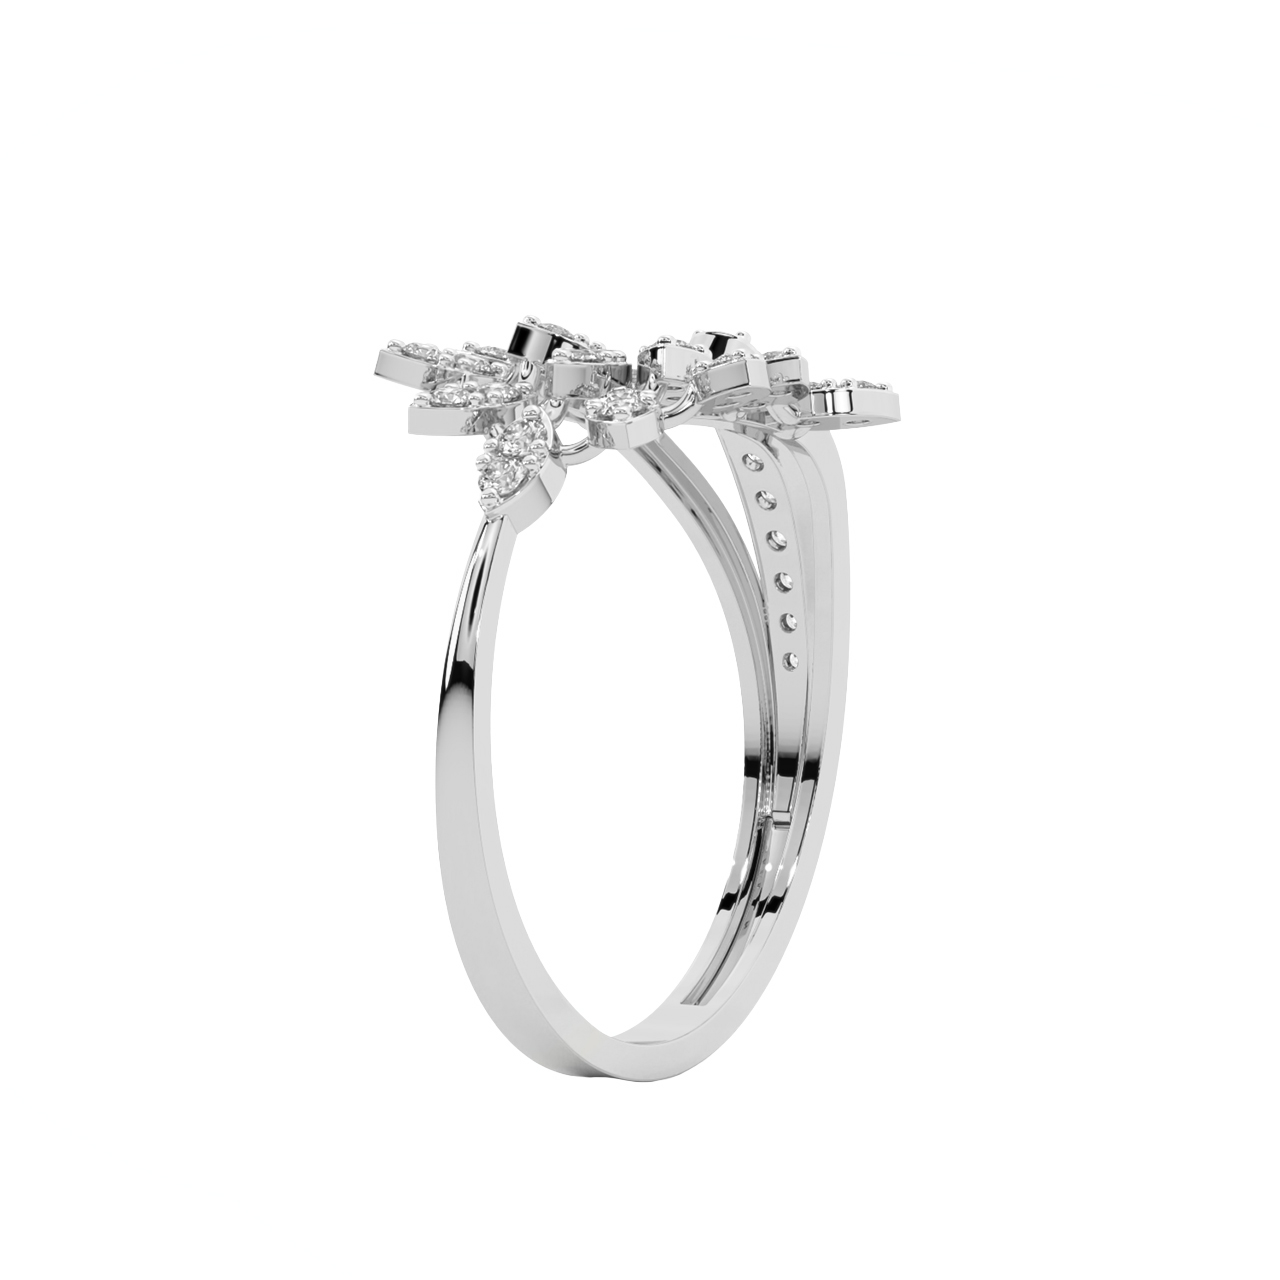 Foliole Diamond Ring For Women